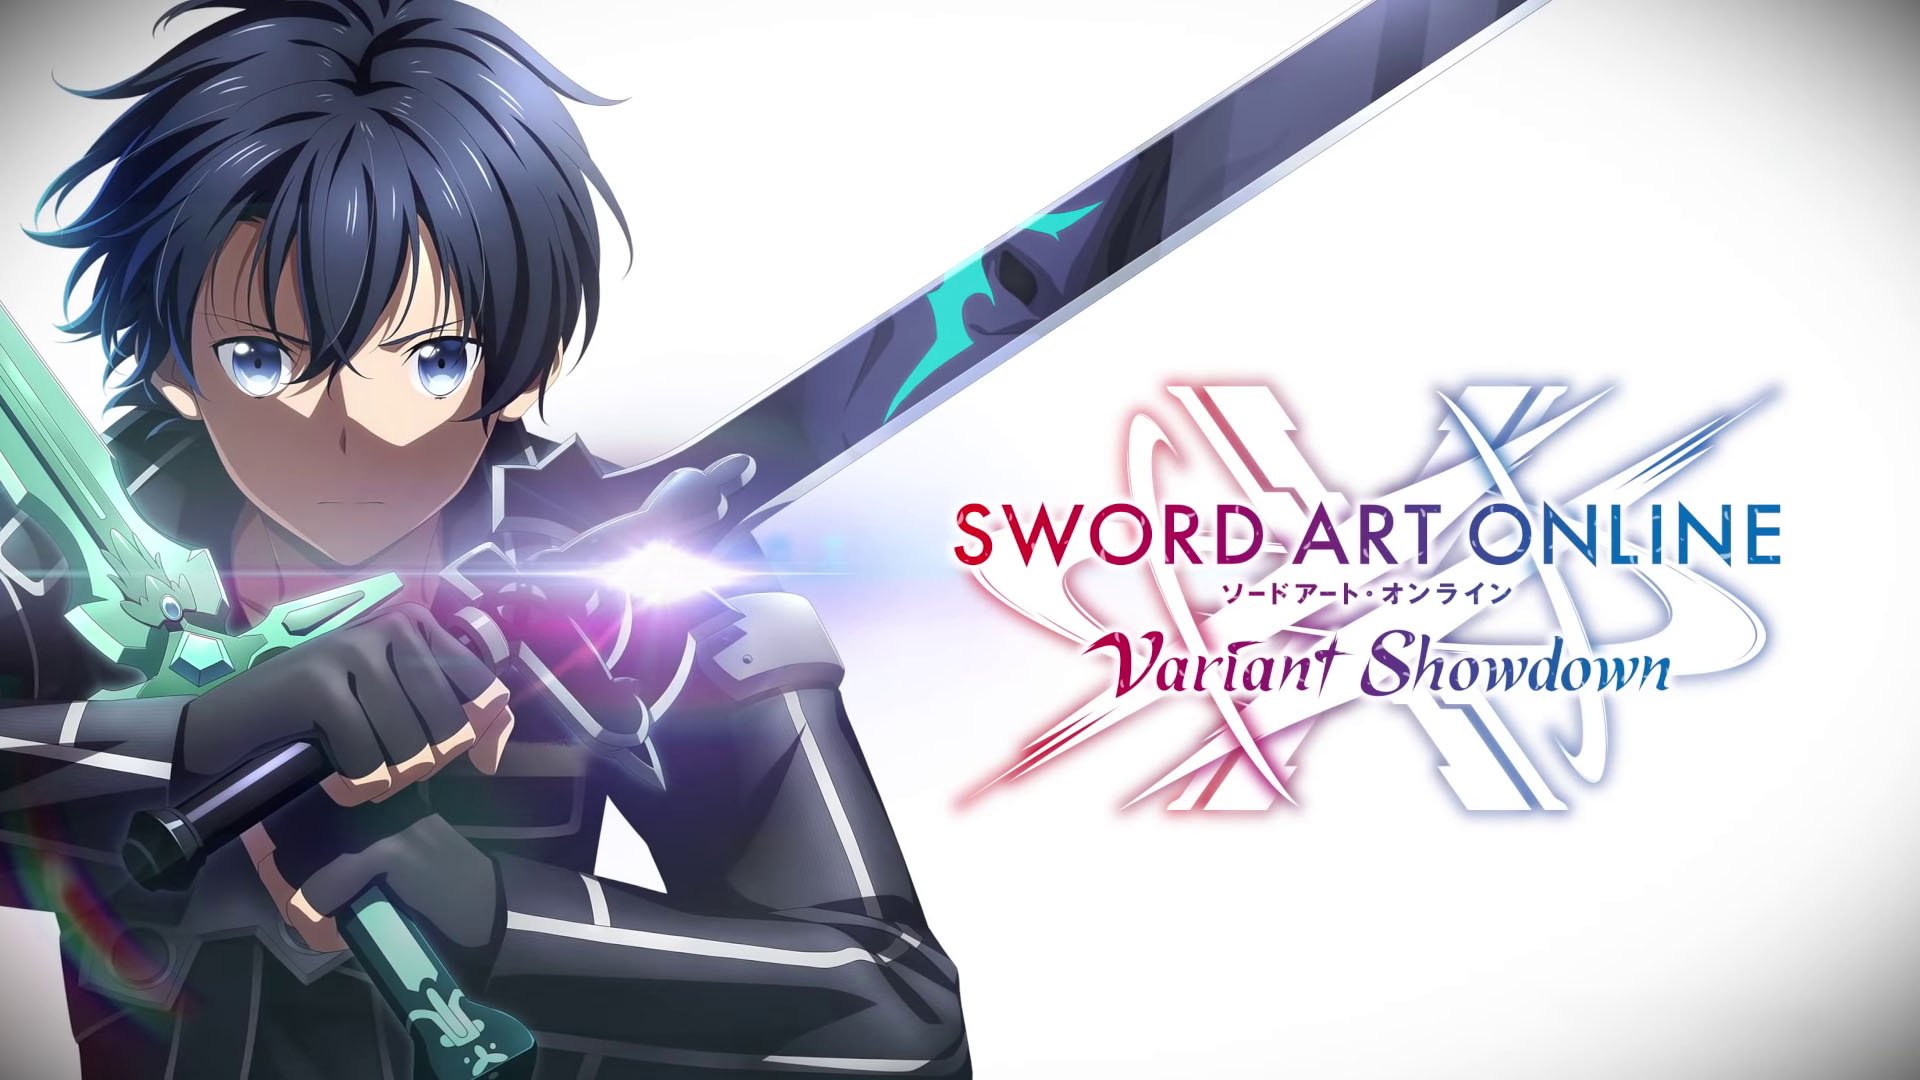 Fighting in a VR World: Sword Art Online